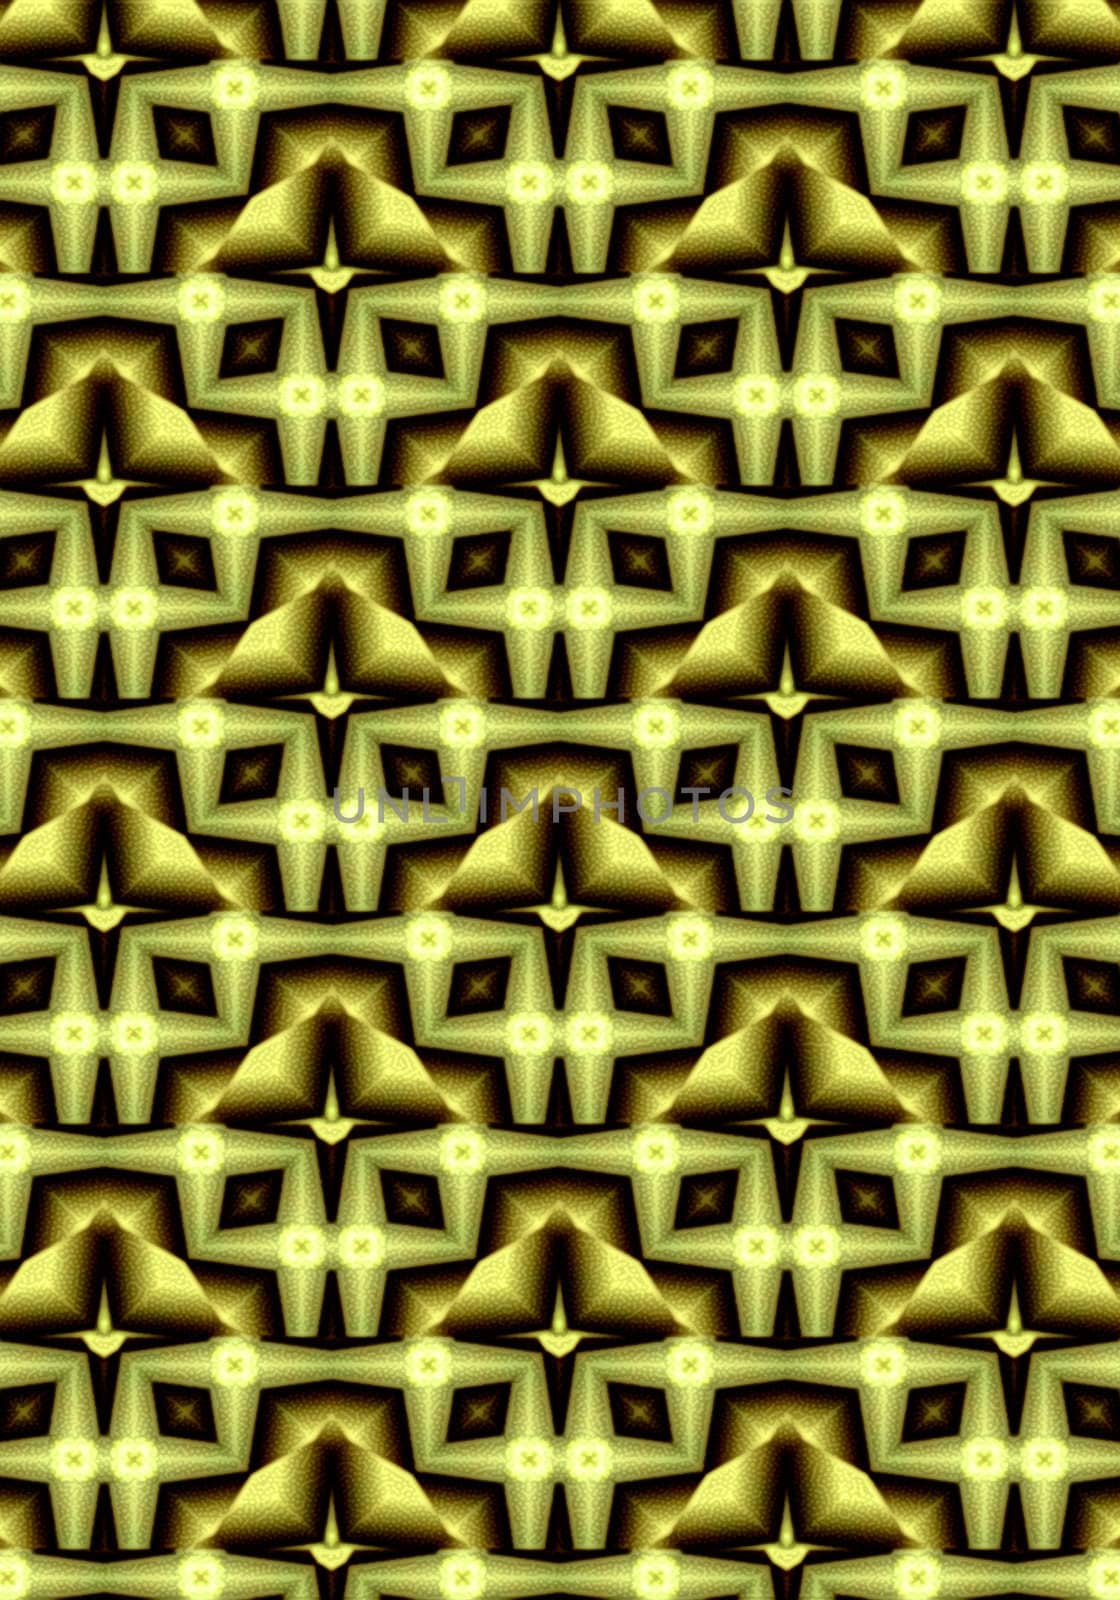 Ornament-pattern by creativ000